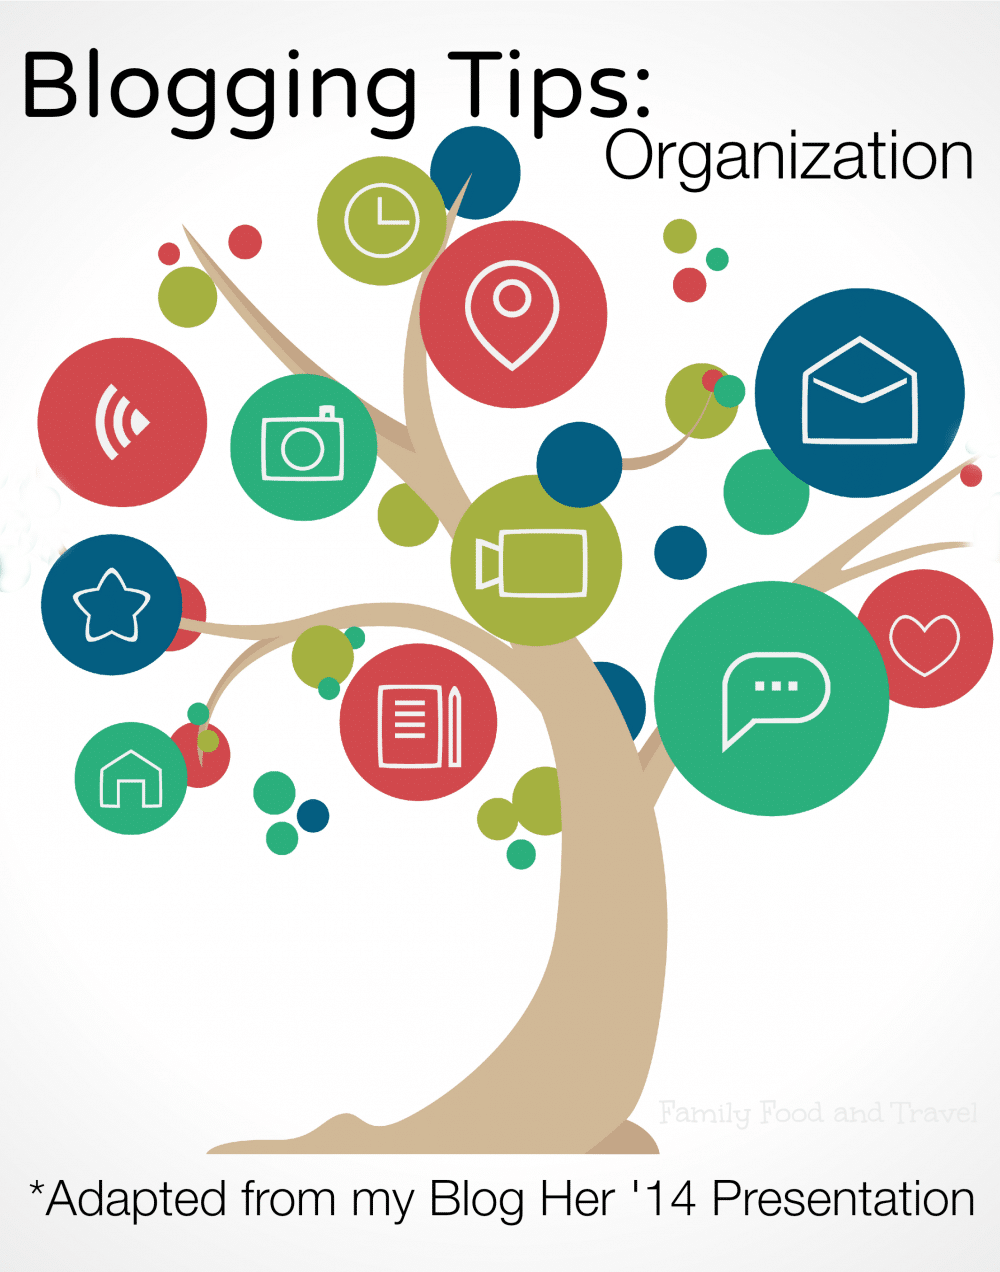 Blogging Tips: Organization